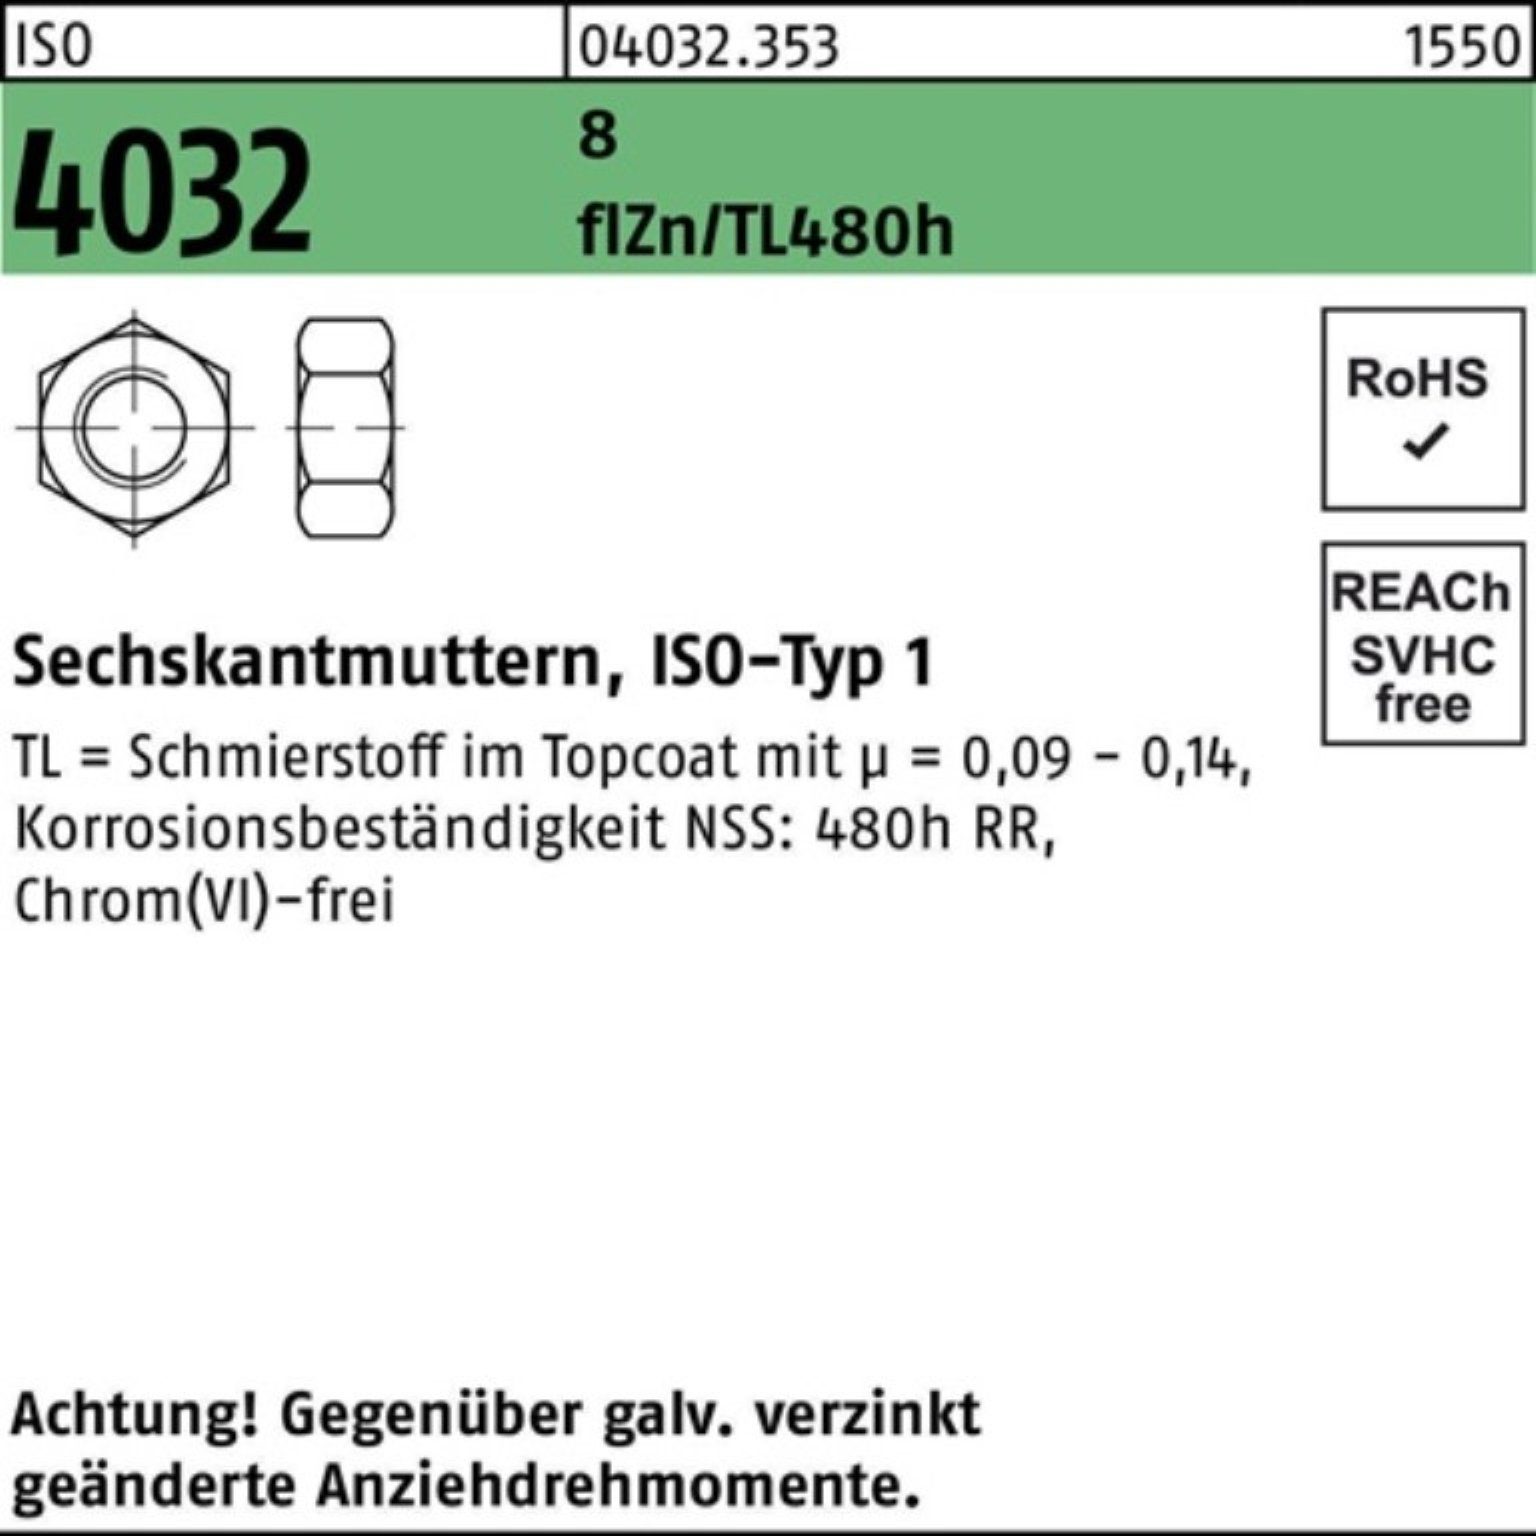 Der Ausverkauf ist da! Bufab Muttern 1000er Pack Sechskantmutter M6 4032 ISO flZ Gleitm. zinklamellenbes. 8